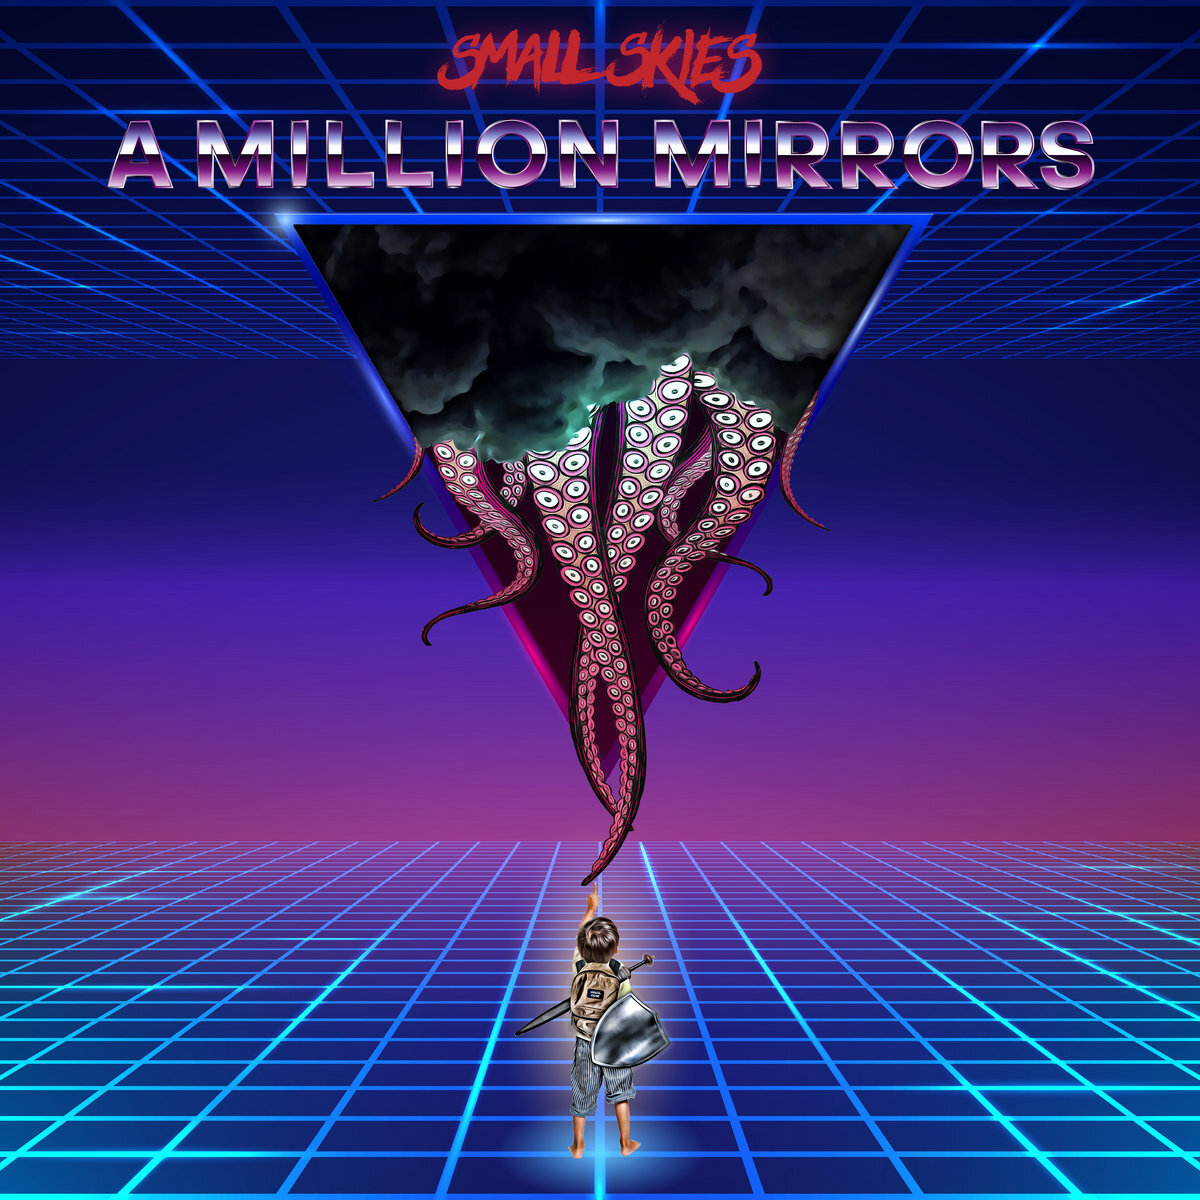 * Small Skies - A Million Mirrors